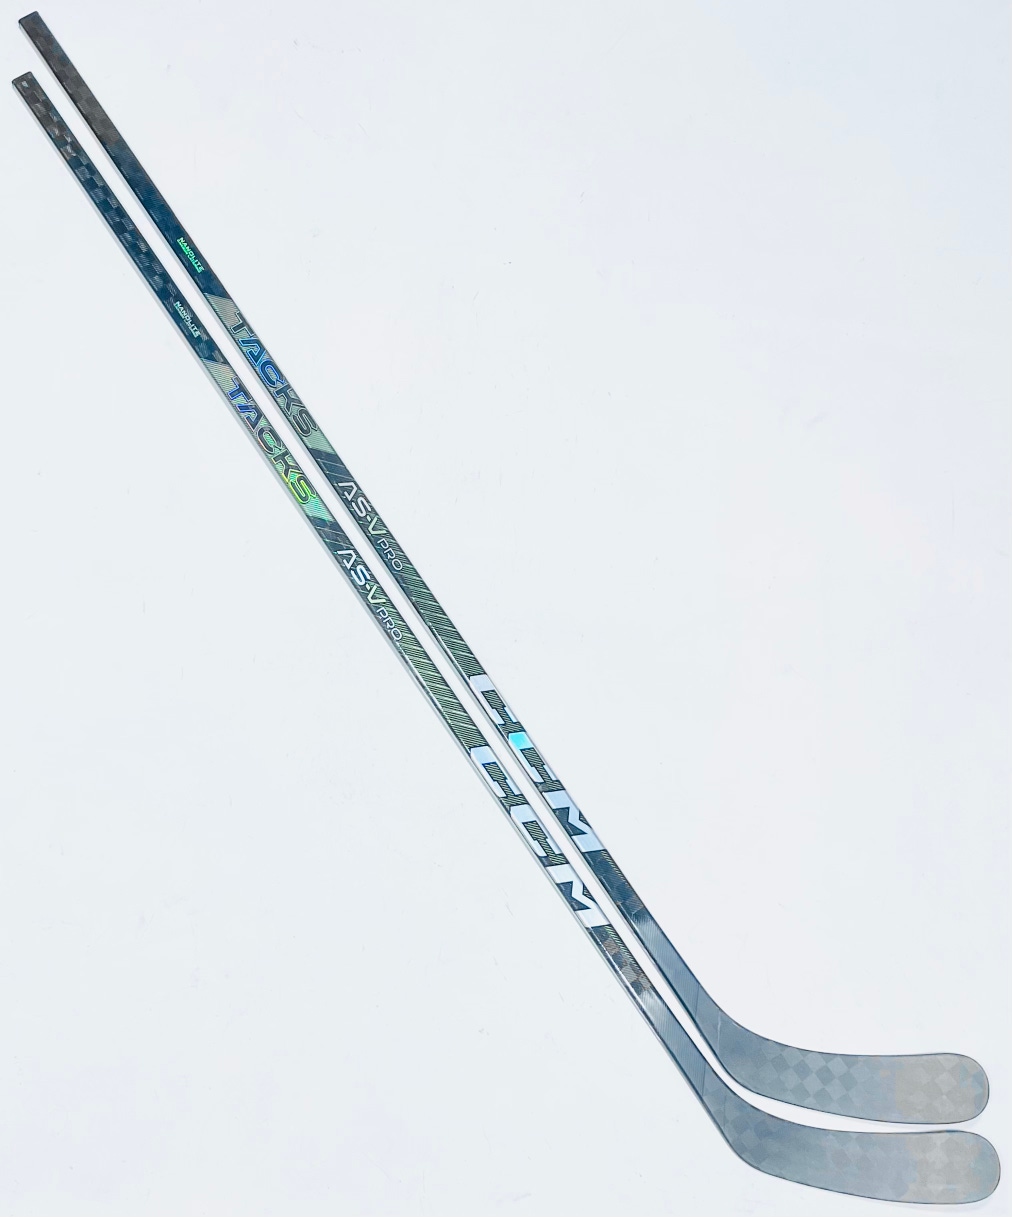 New 2 Pack CCM Supertacks AS-V Pro Hockey Stick-LH-P90-85 Flex-Grip